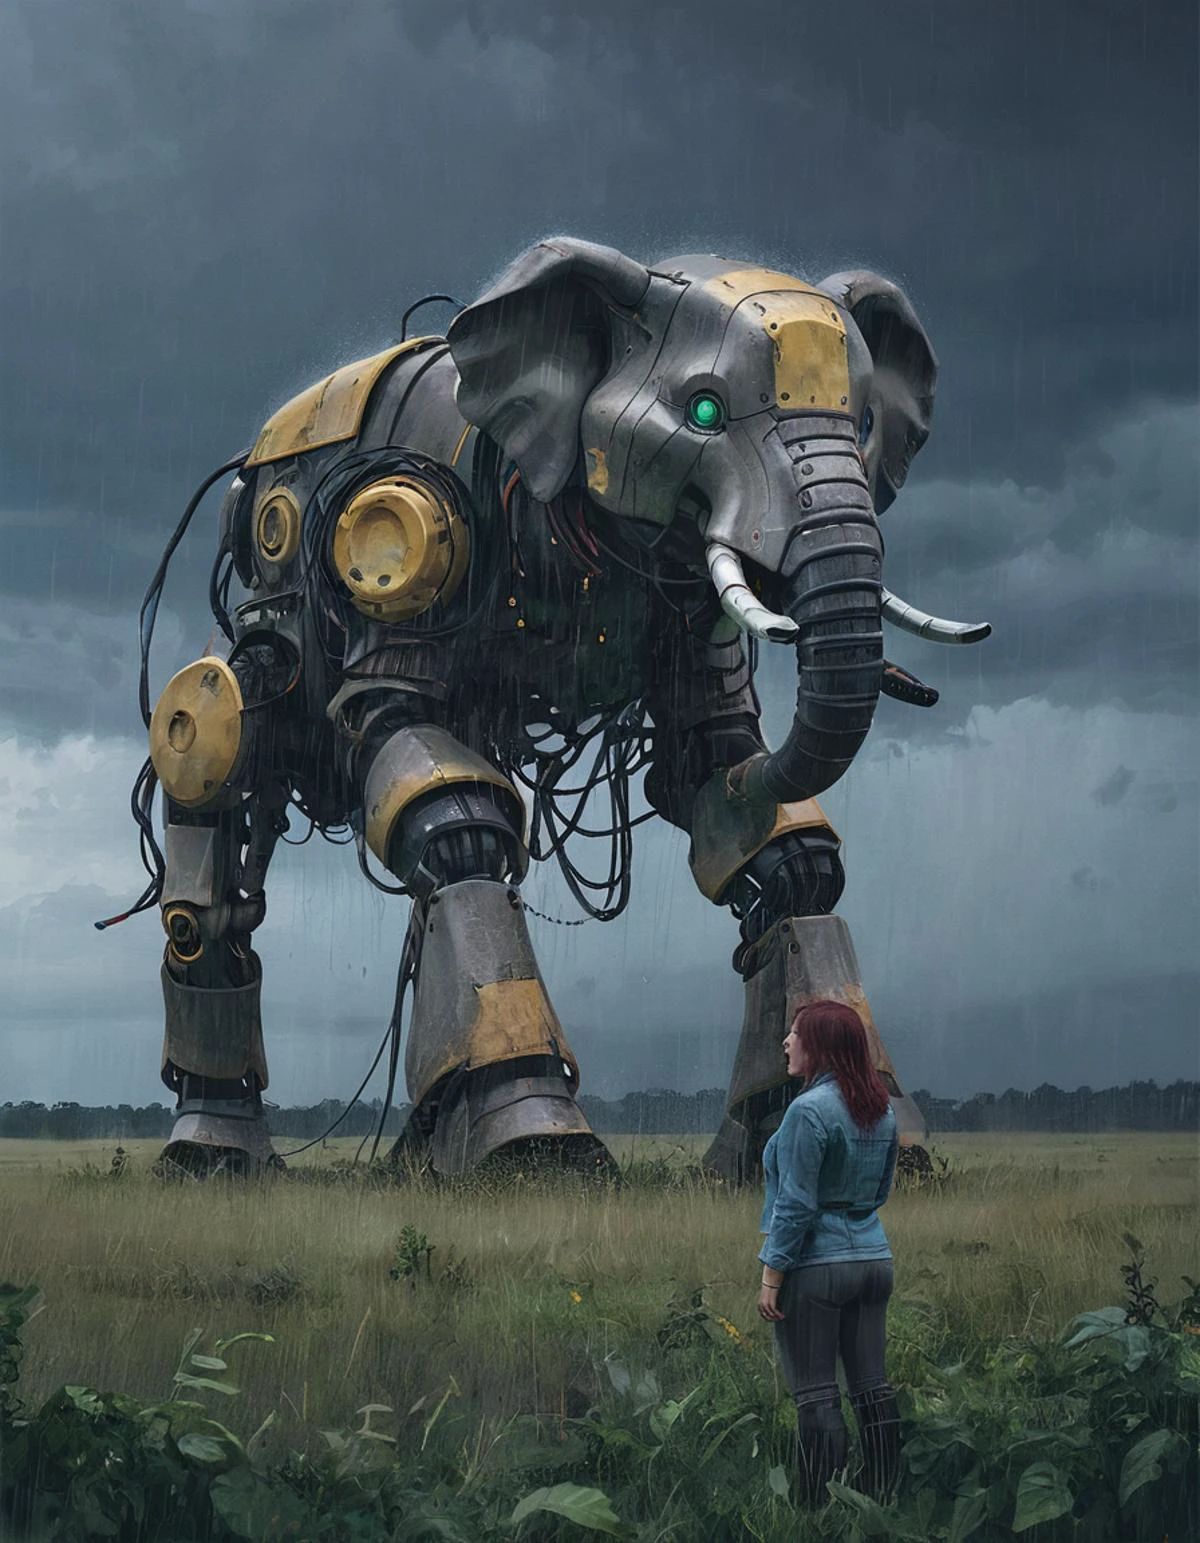 ssta giant pachyderm robot, overgrown pasture, curious woman, wide shot, rain, storm, lighting creates a dramatic atmosphere